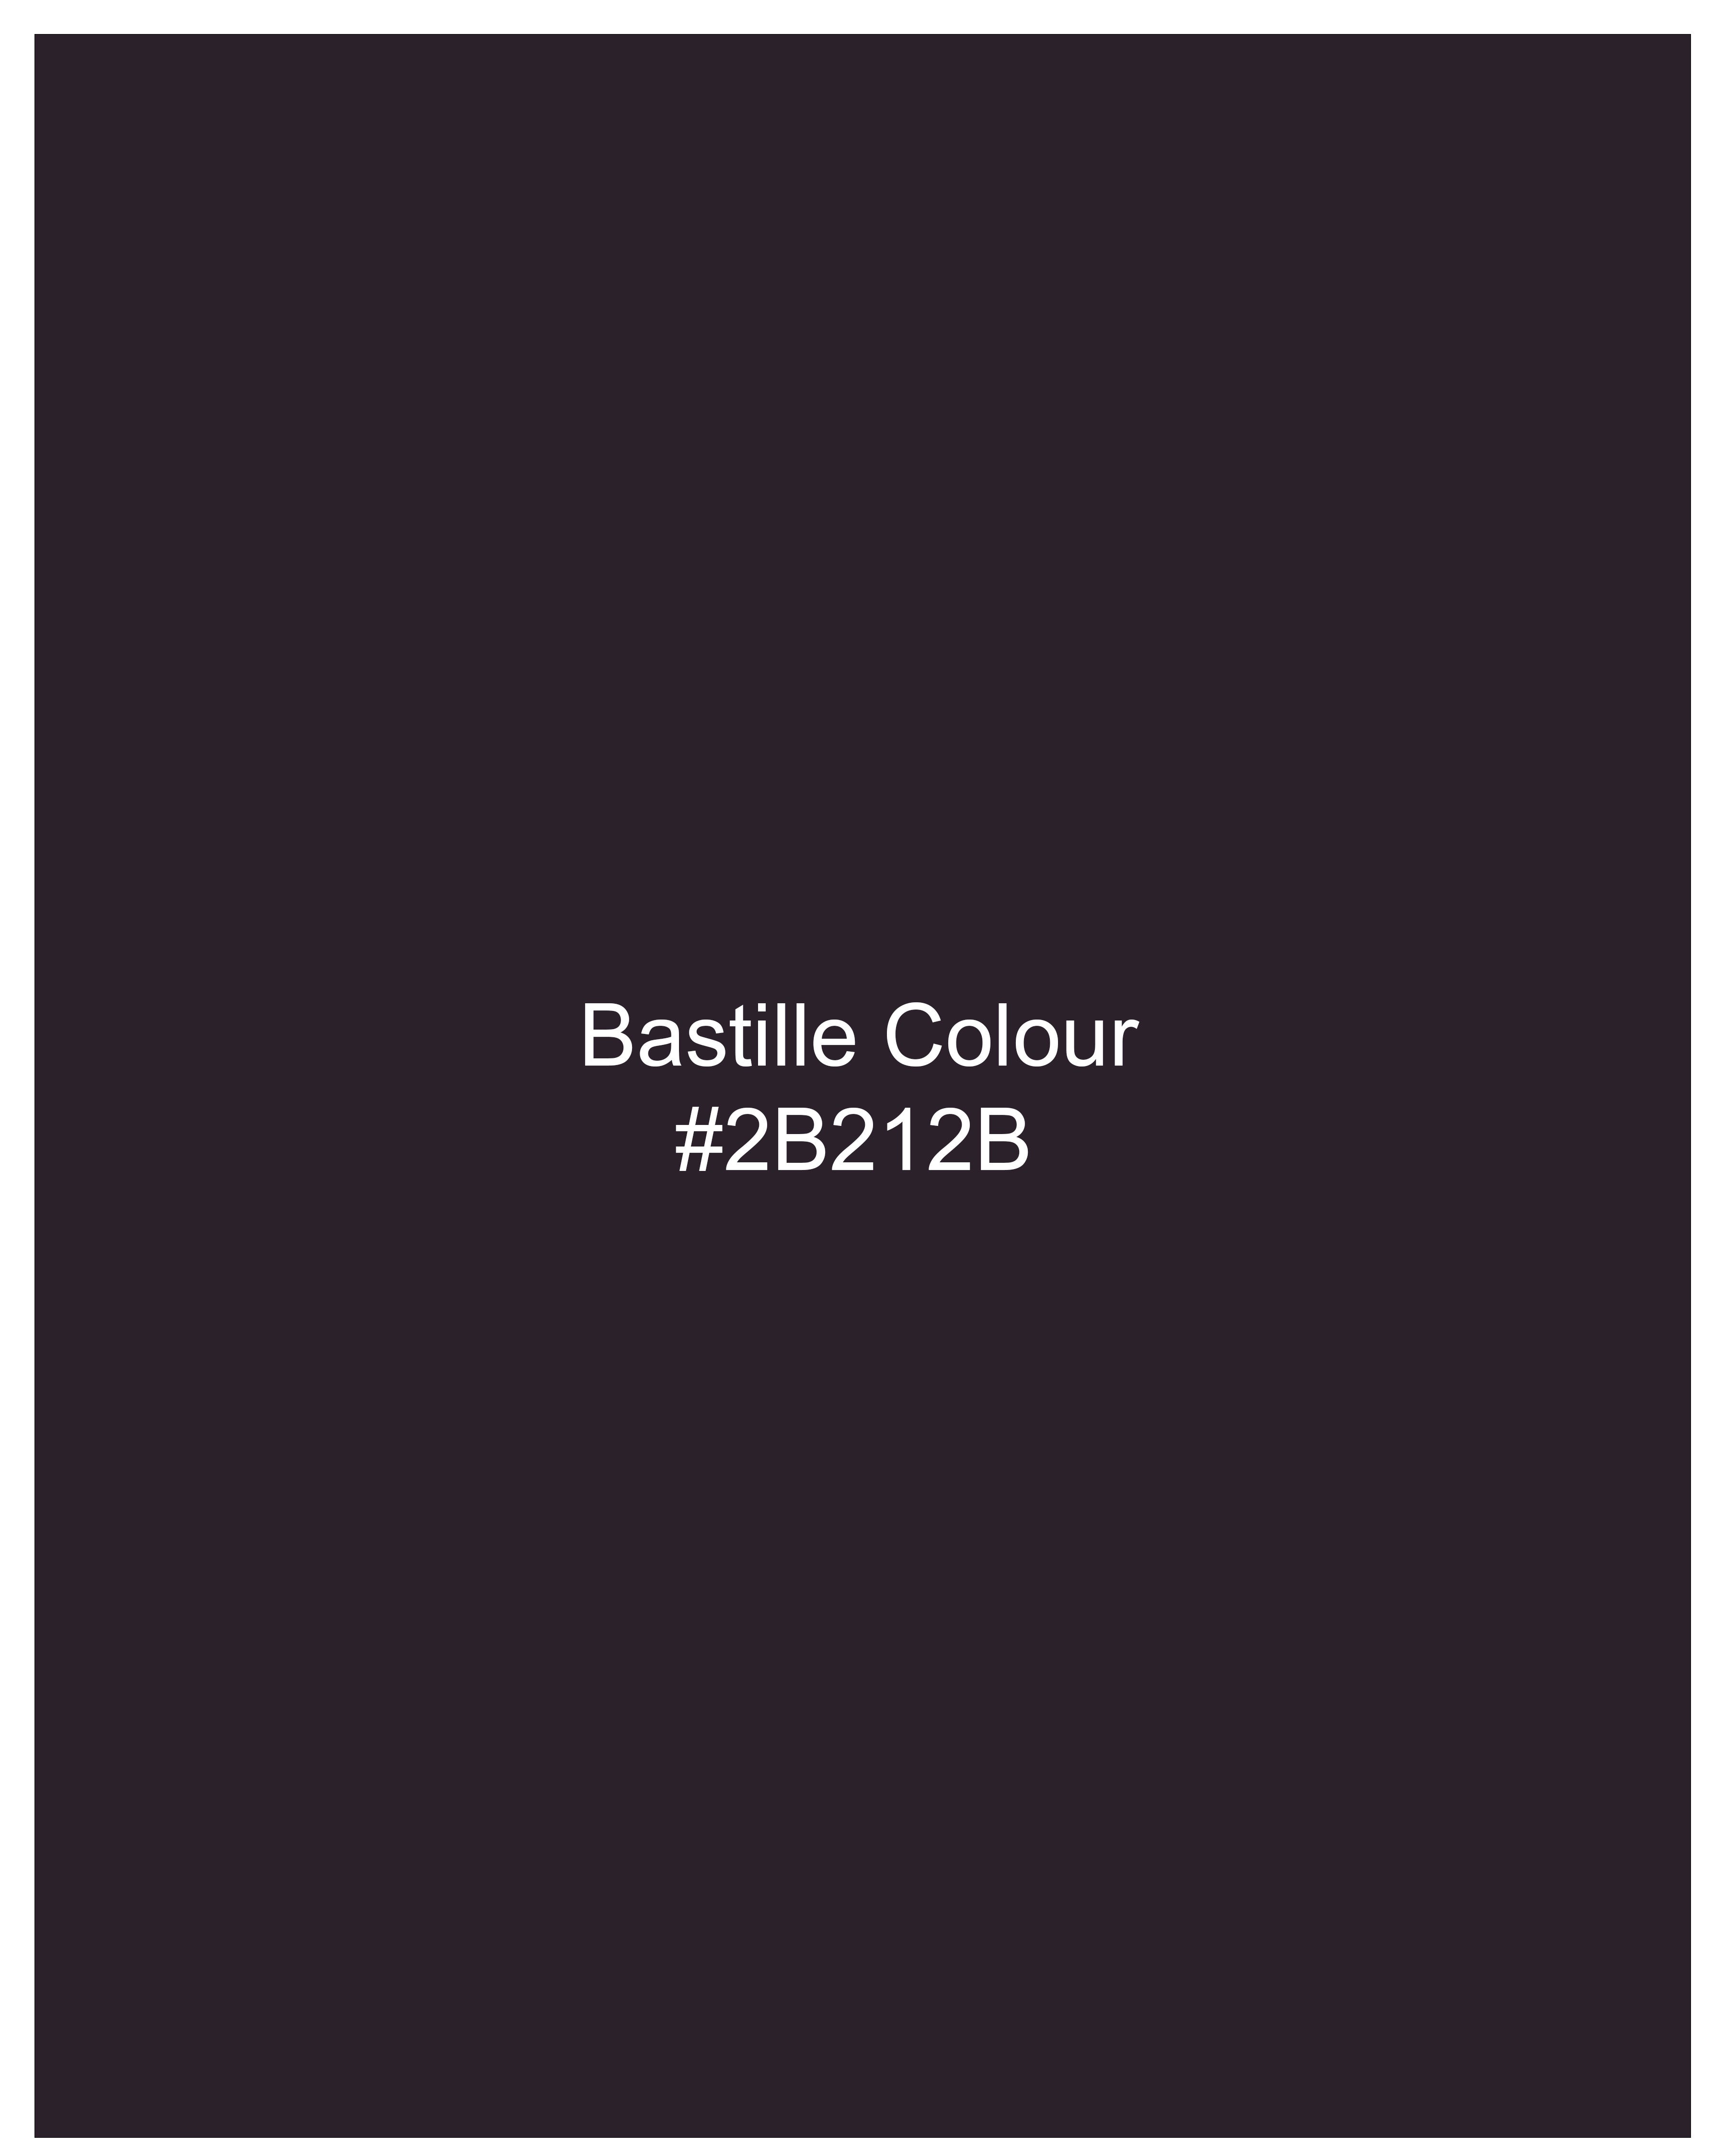 Bastille Maroon Pant T2352-28, T2352-30, T2352-32, T2352-34, T2352-36, T2352-38, T2352-40, T2352-42, T2352-44